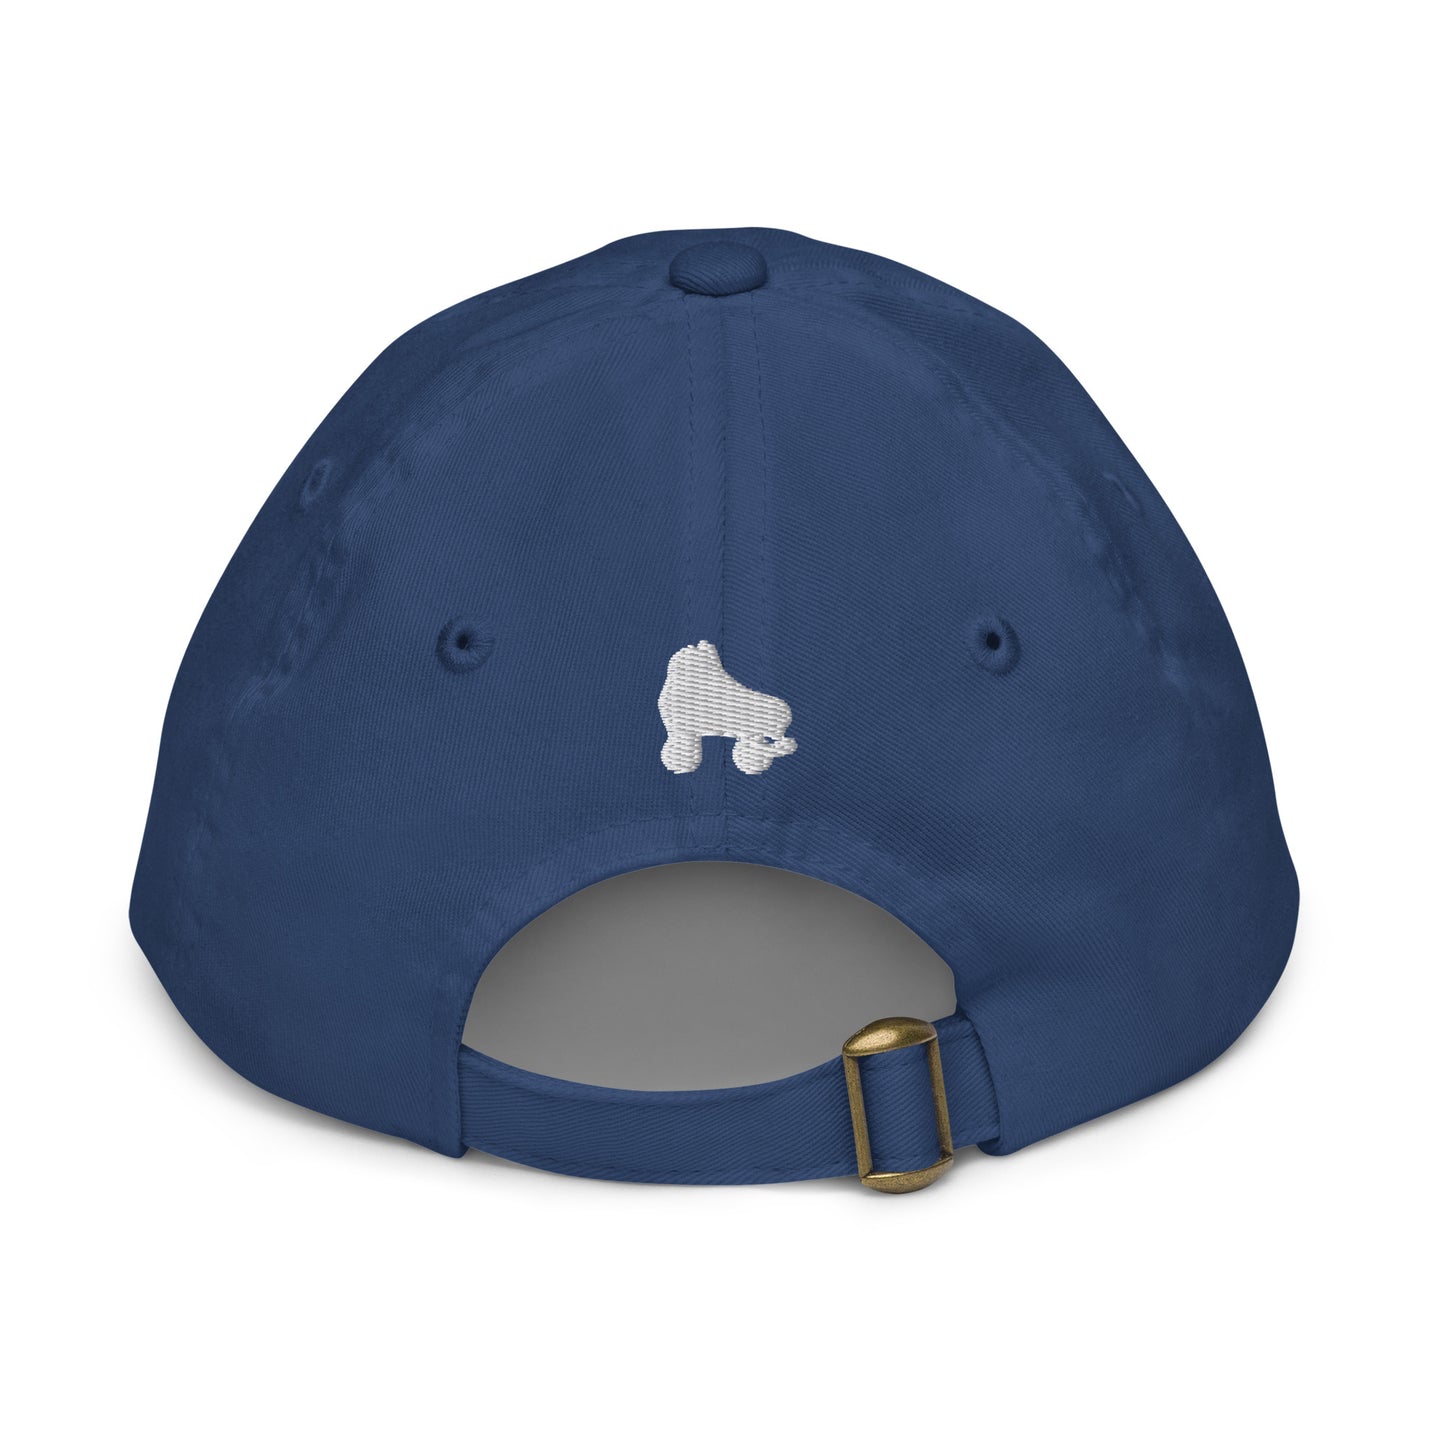 Youth baseball cap